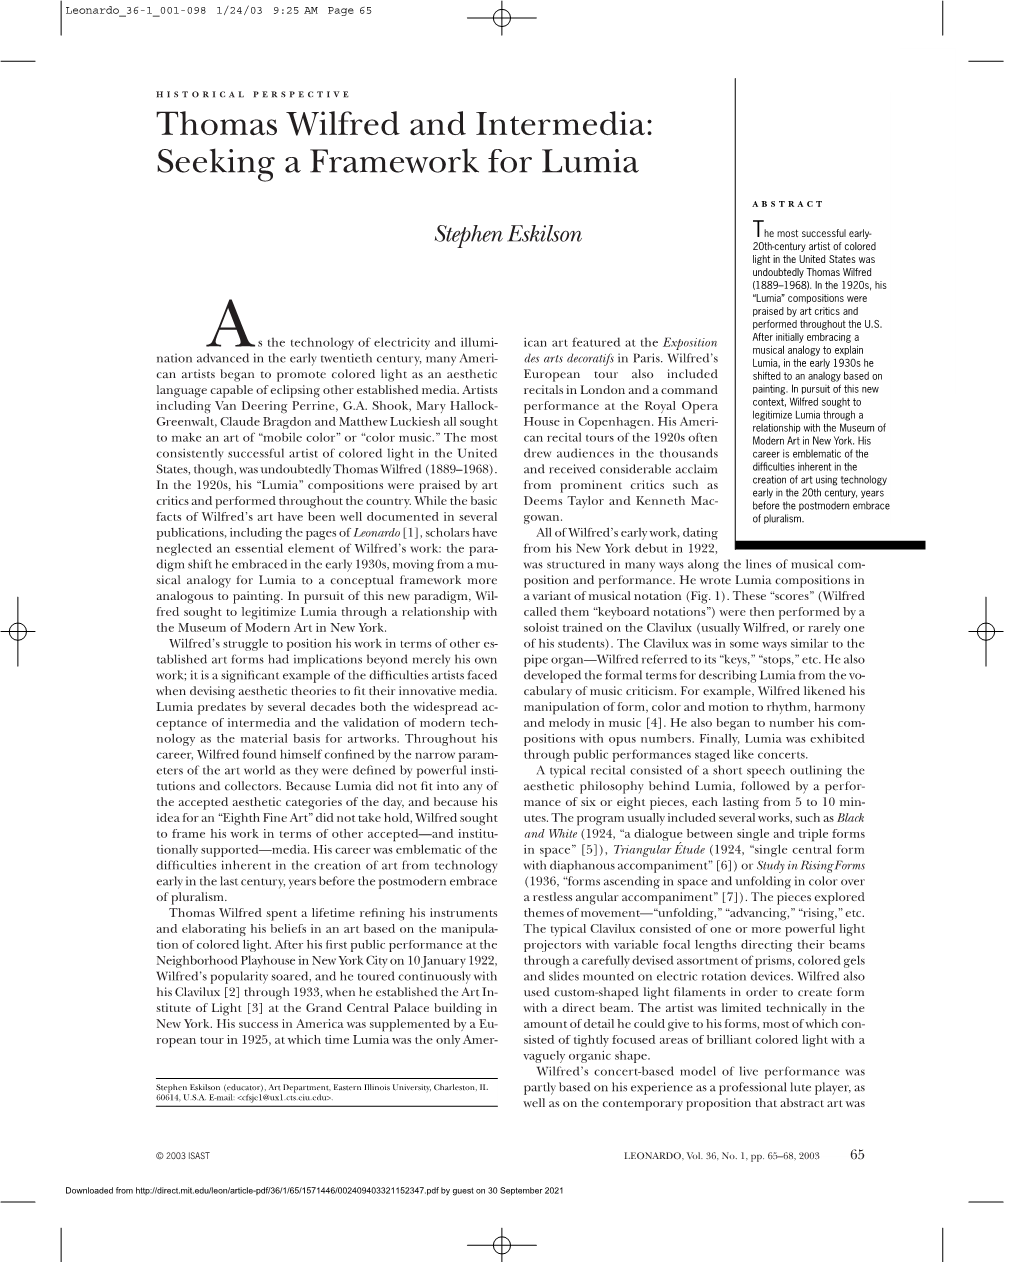 Thomas Wilfred and Intermedia: Seeking a Framework for Lumia